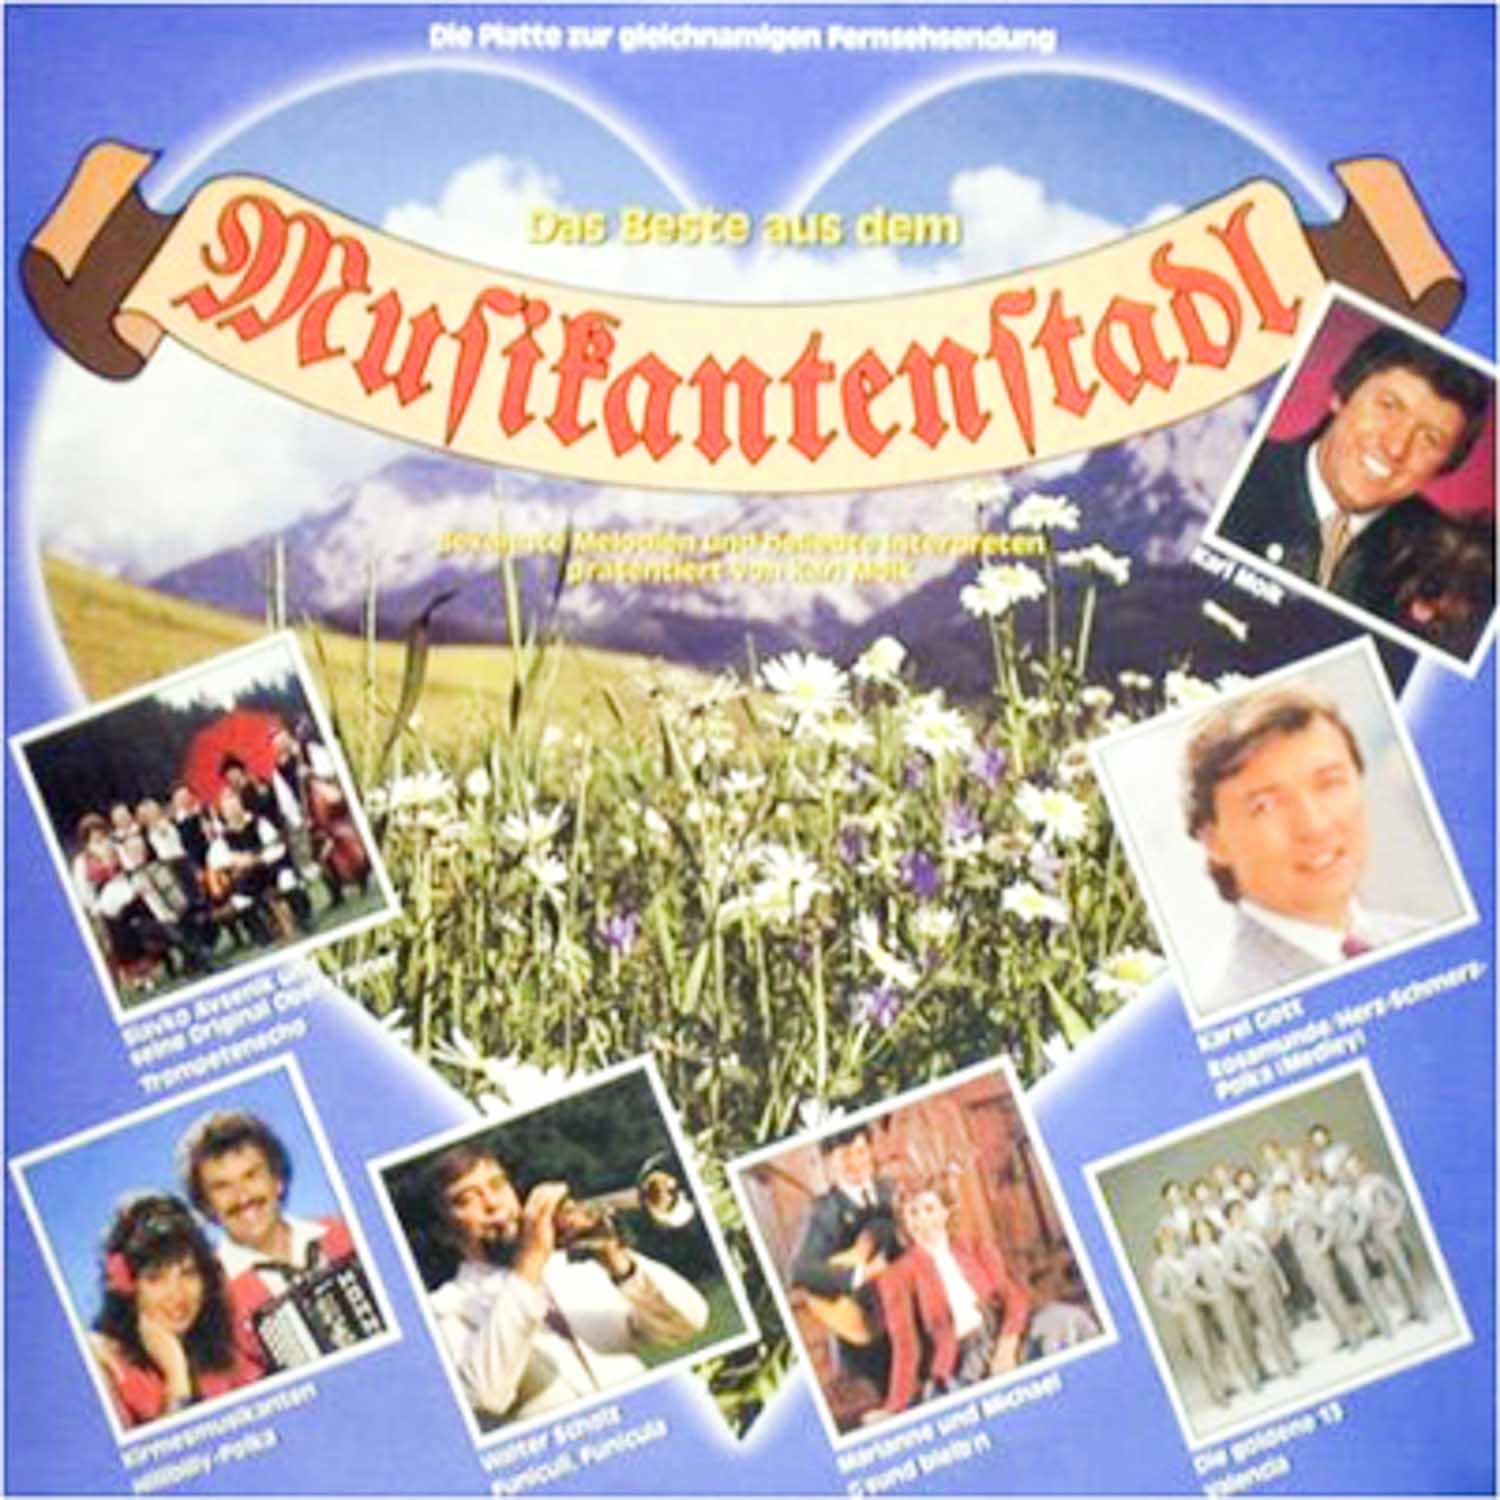 Sampler  Das Beste aus dem Musikantenstadl (4501211)  *LP 12'' (Vinyl)*. 